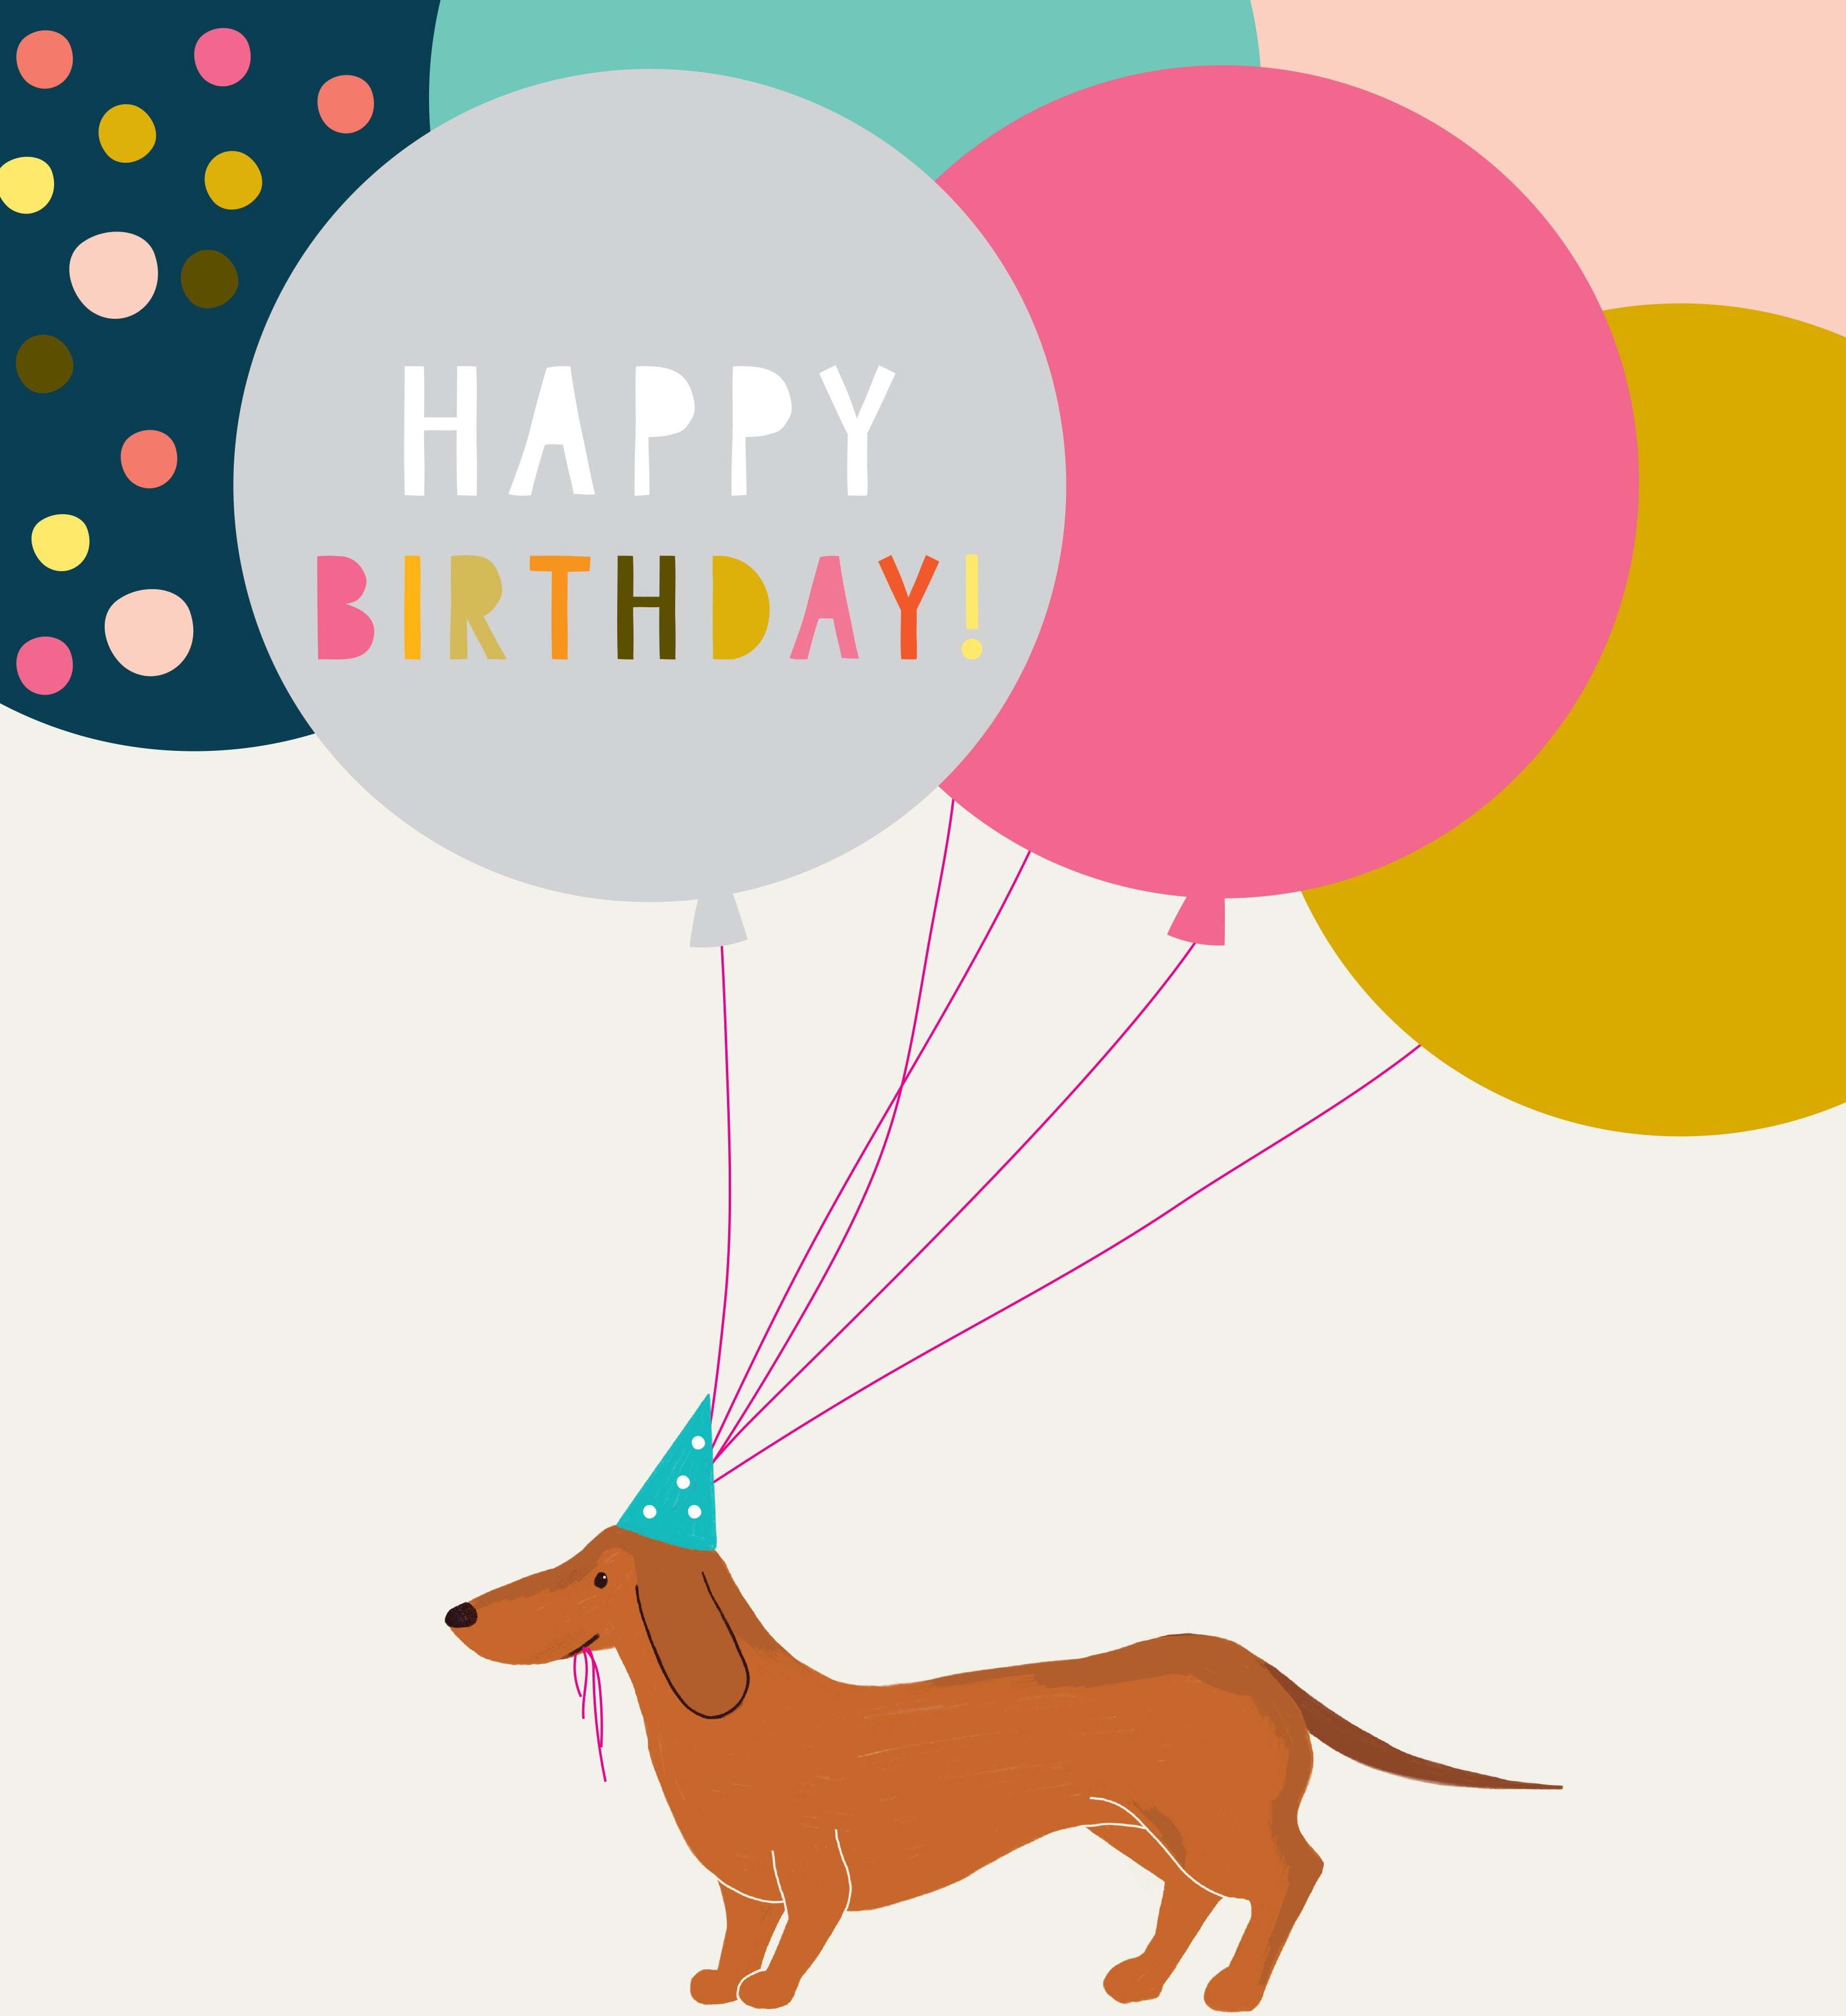 Sausage Dog and Balloons Birthday Card